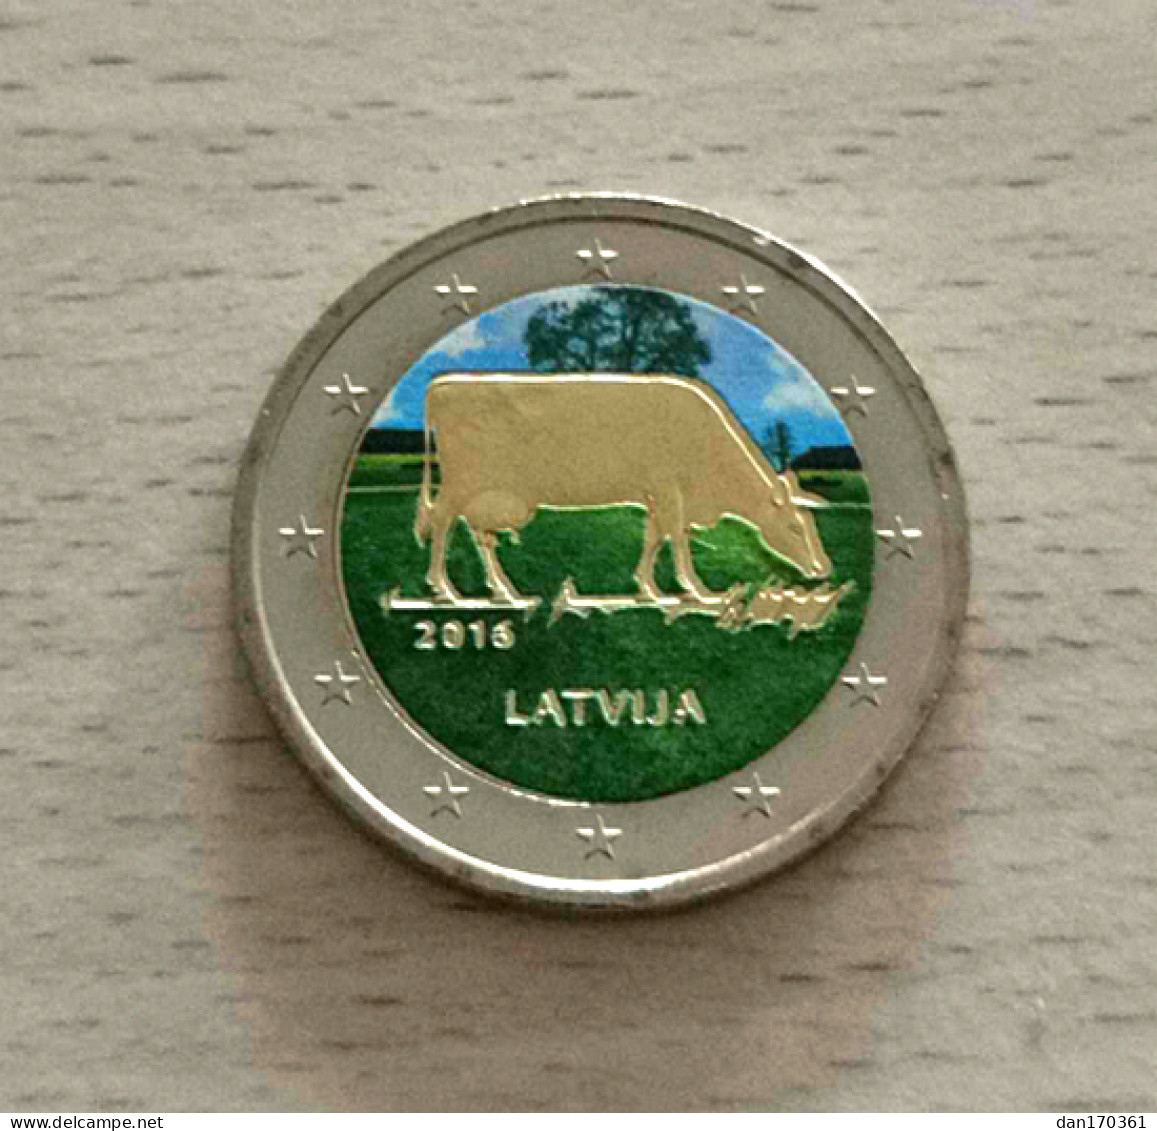 LETTONIE 2016 - INDUSTRIE LAITIERE VACHE BRUNE -  2 EURO COMMEMORATIVE - COULEUR - FARBE - COLORED - COLOR - COLORISEE - Lettonia